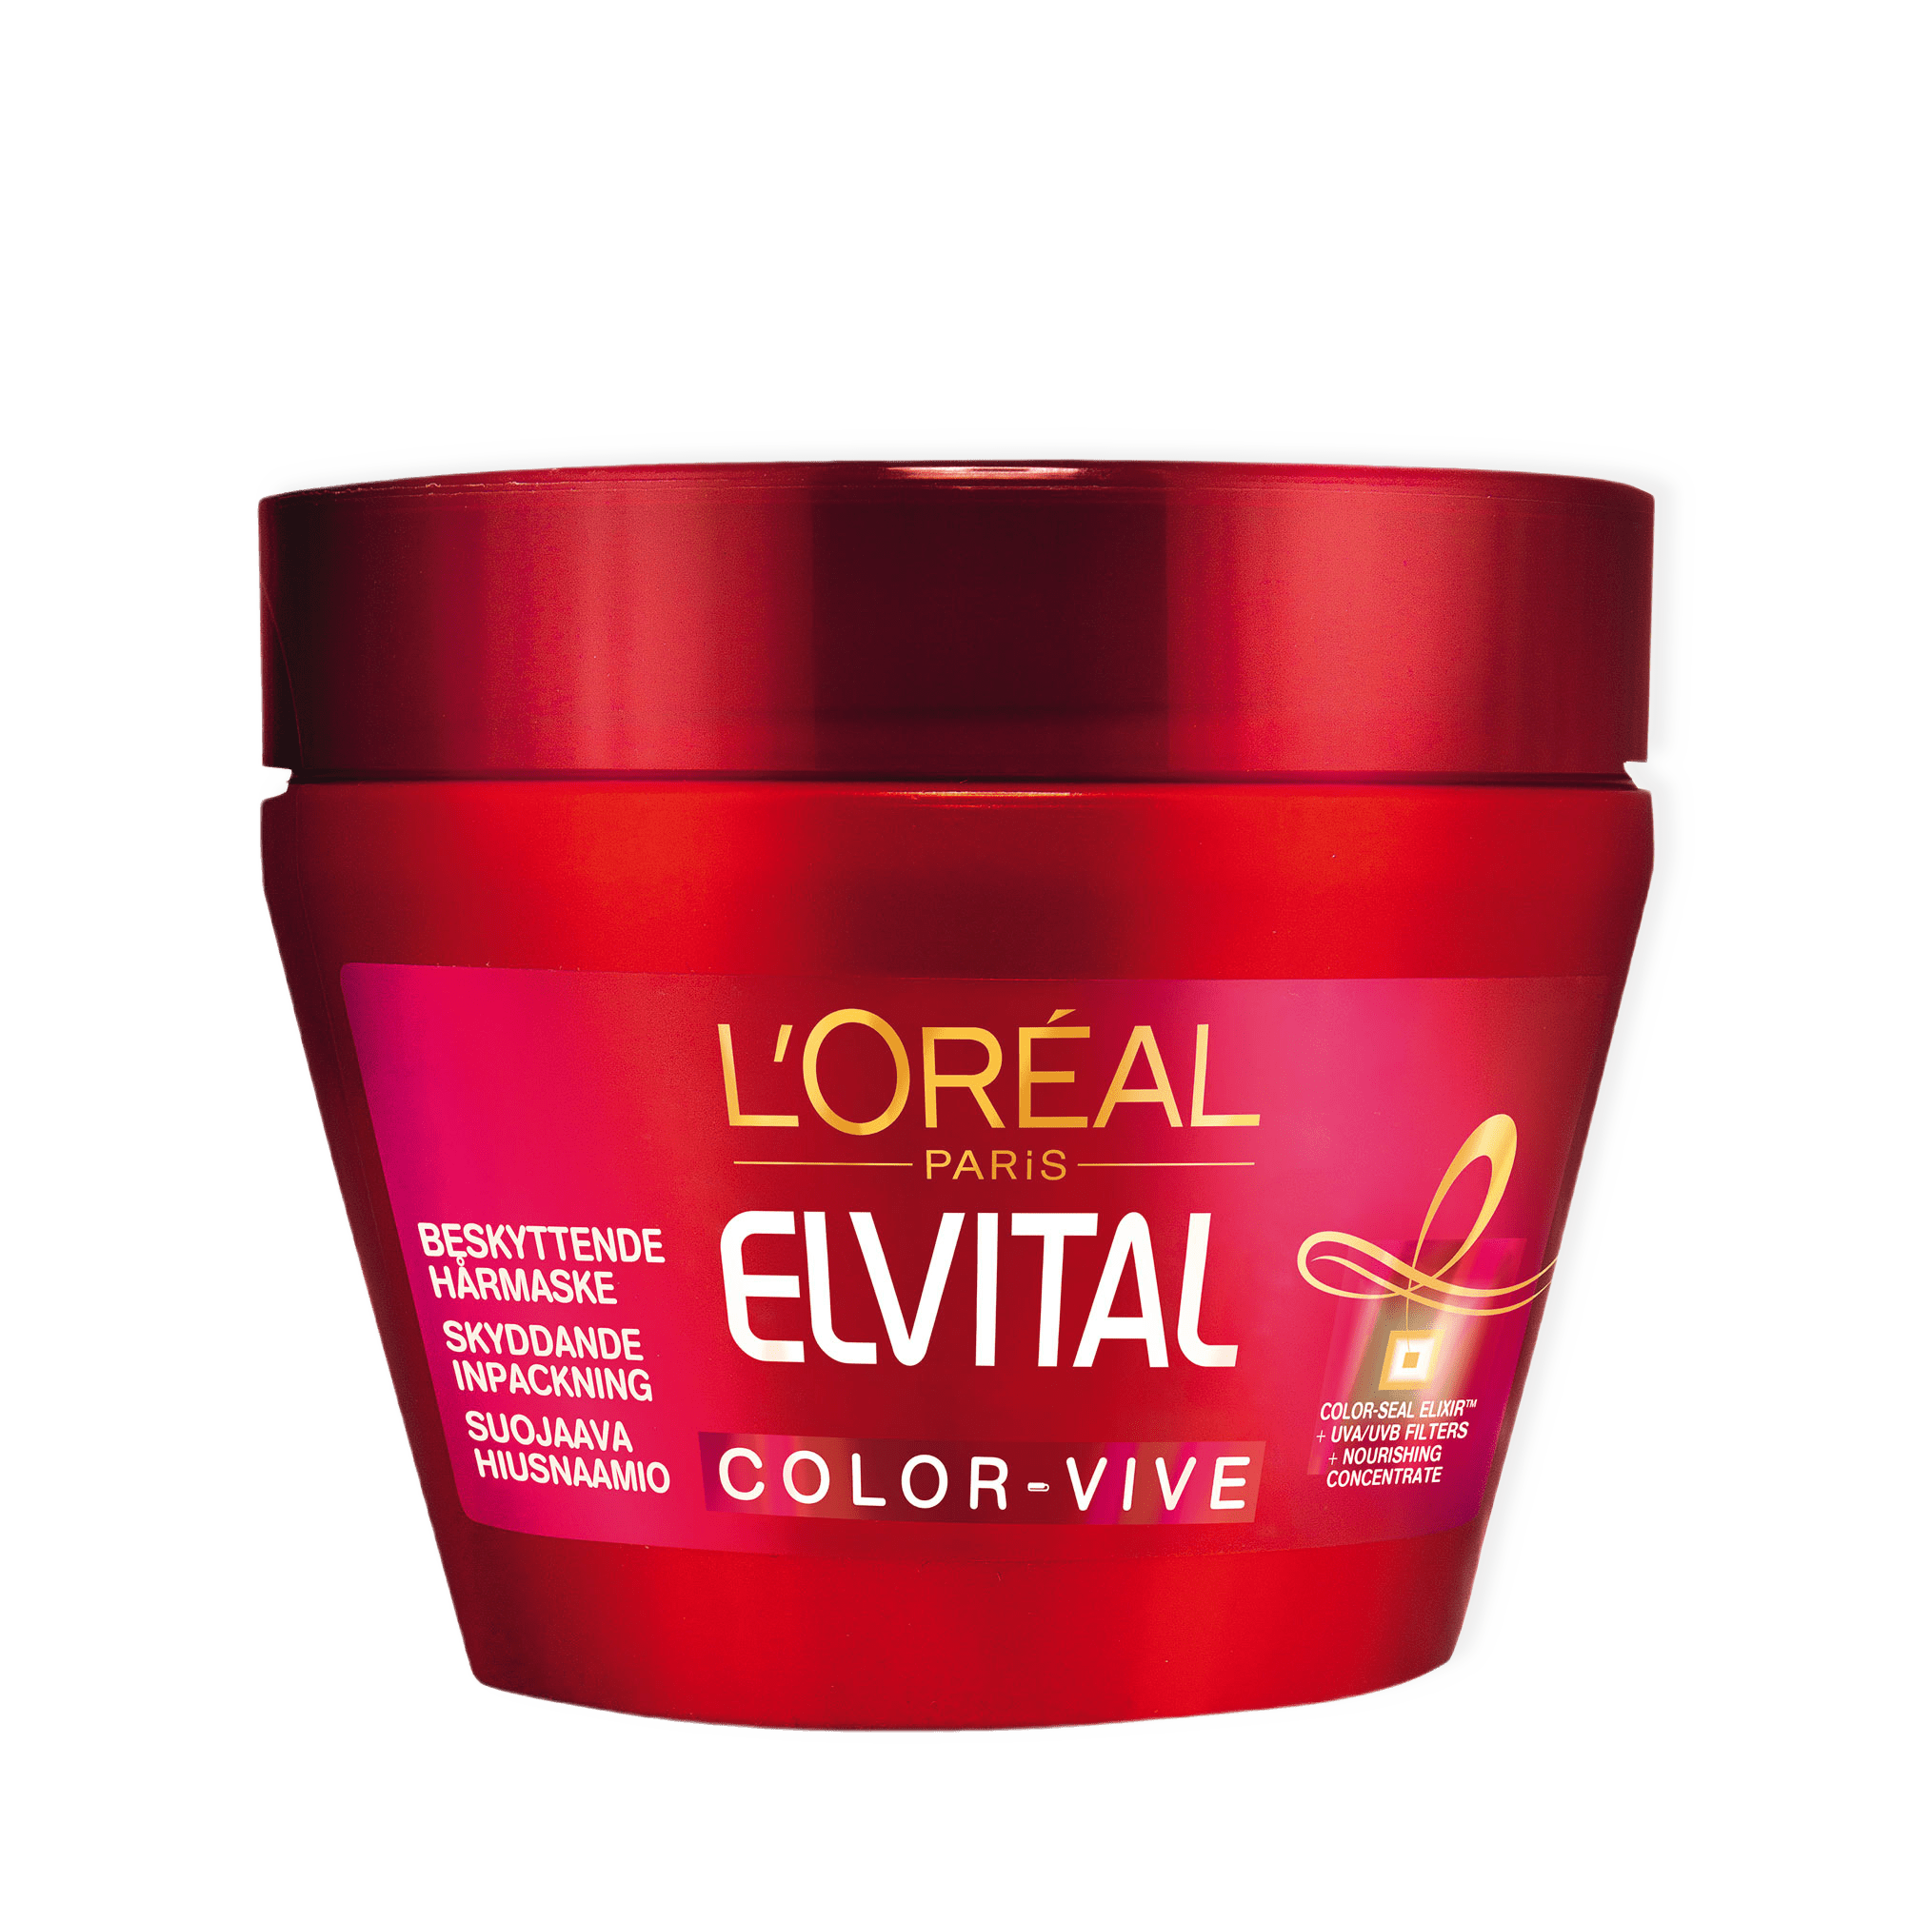 Elvital Color-Vive Inpackning, 300 ml från L'Oréal Paris